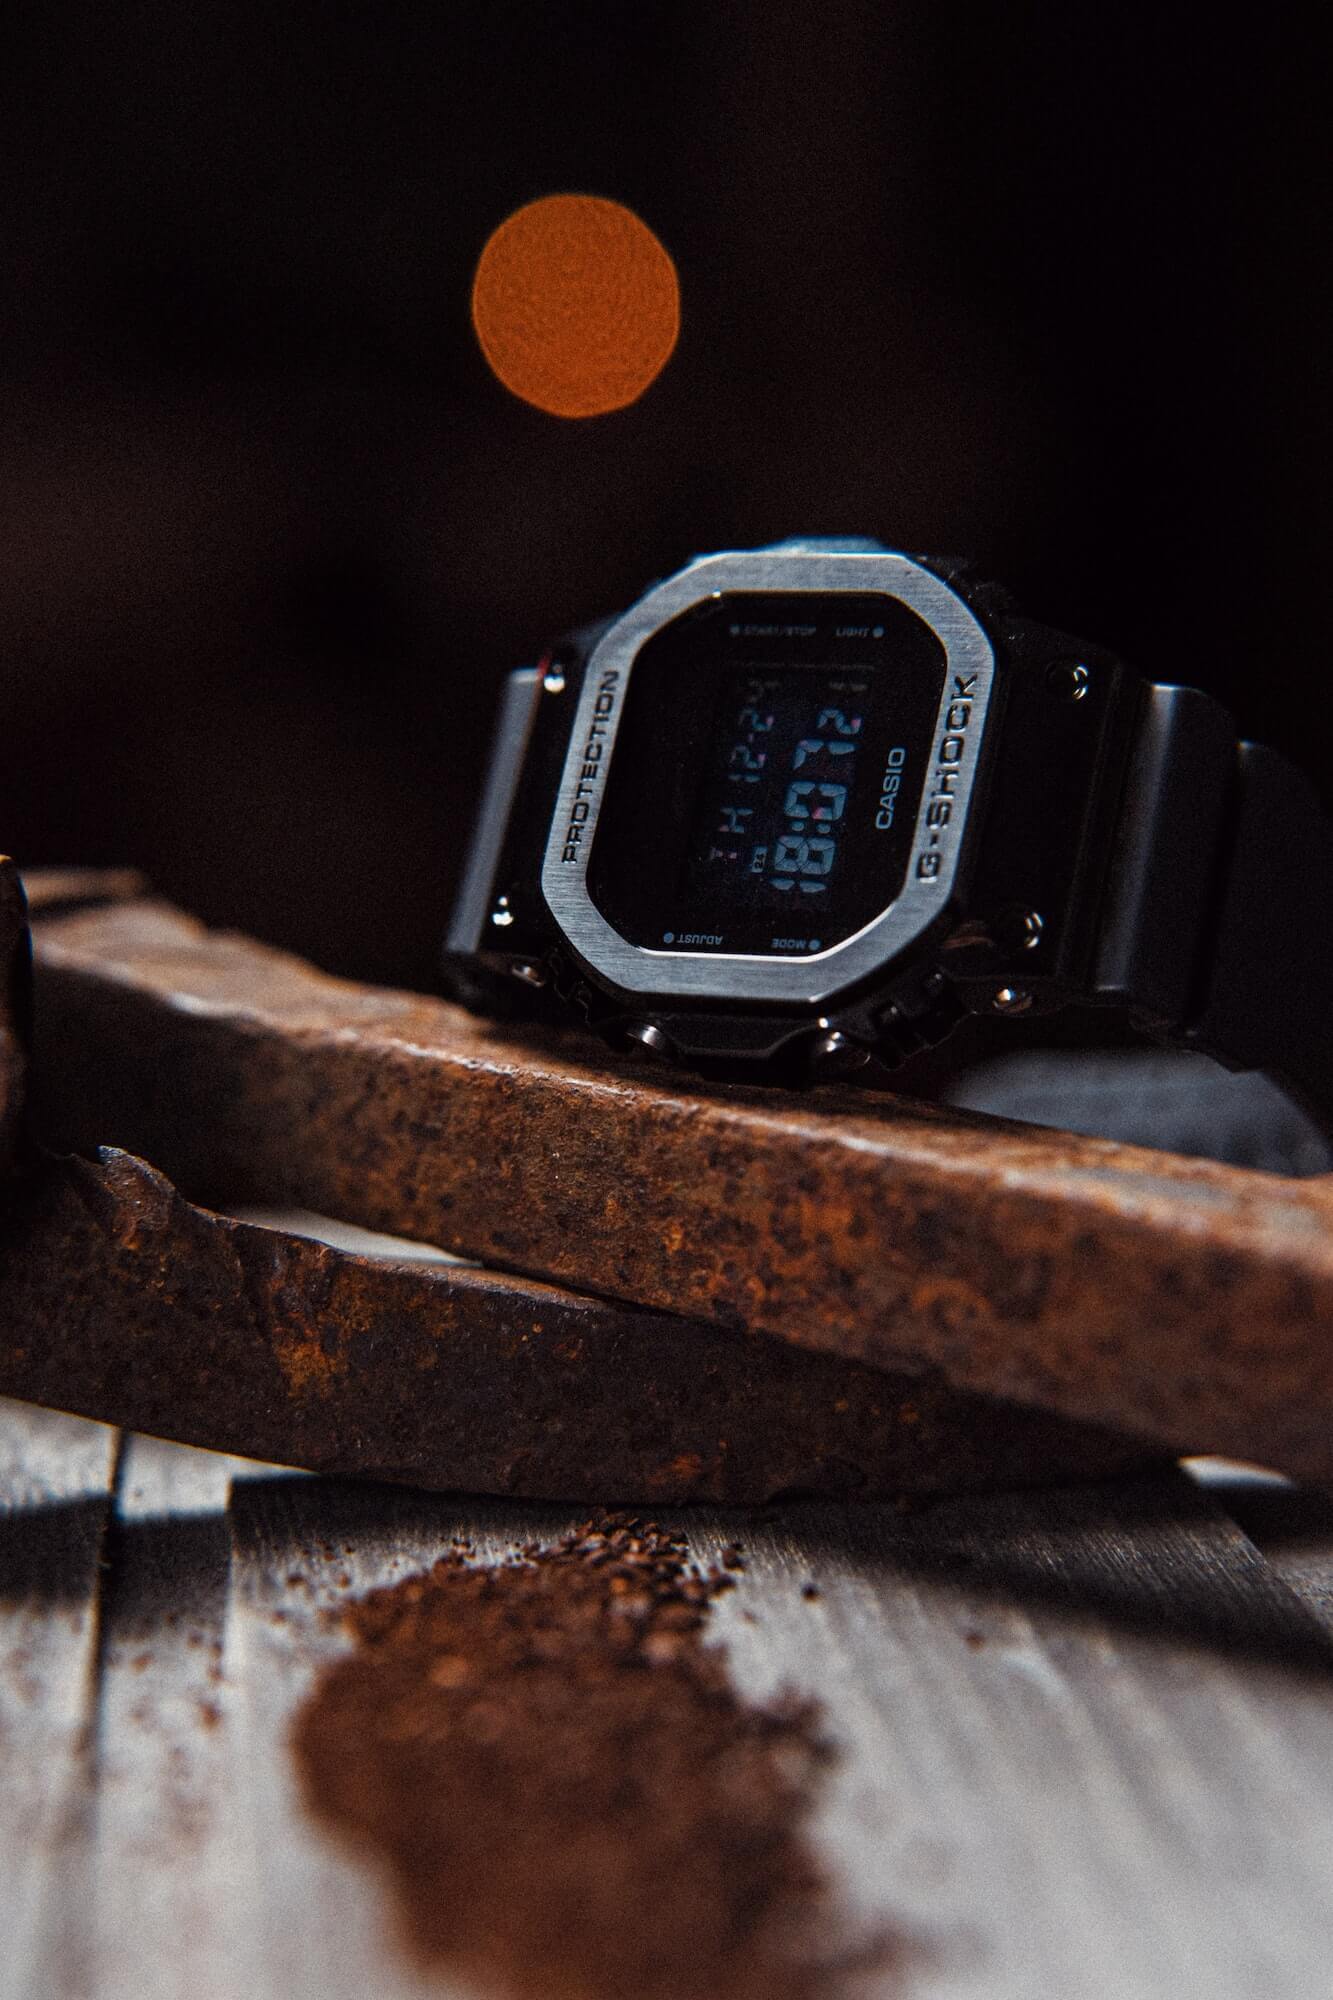 Casio G-Shock digital watch rests atop a rusty metal tool